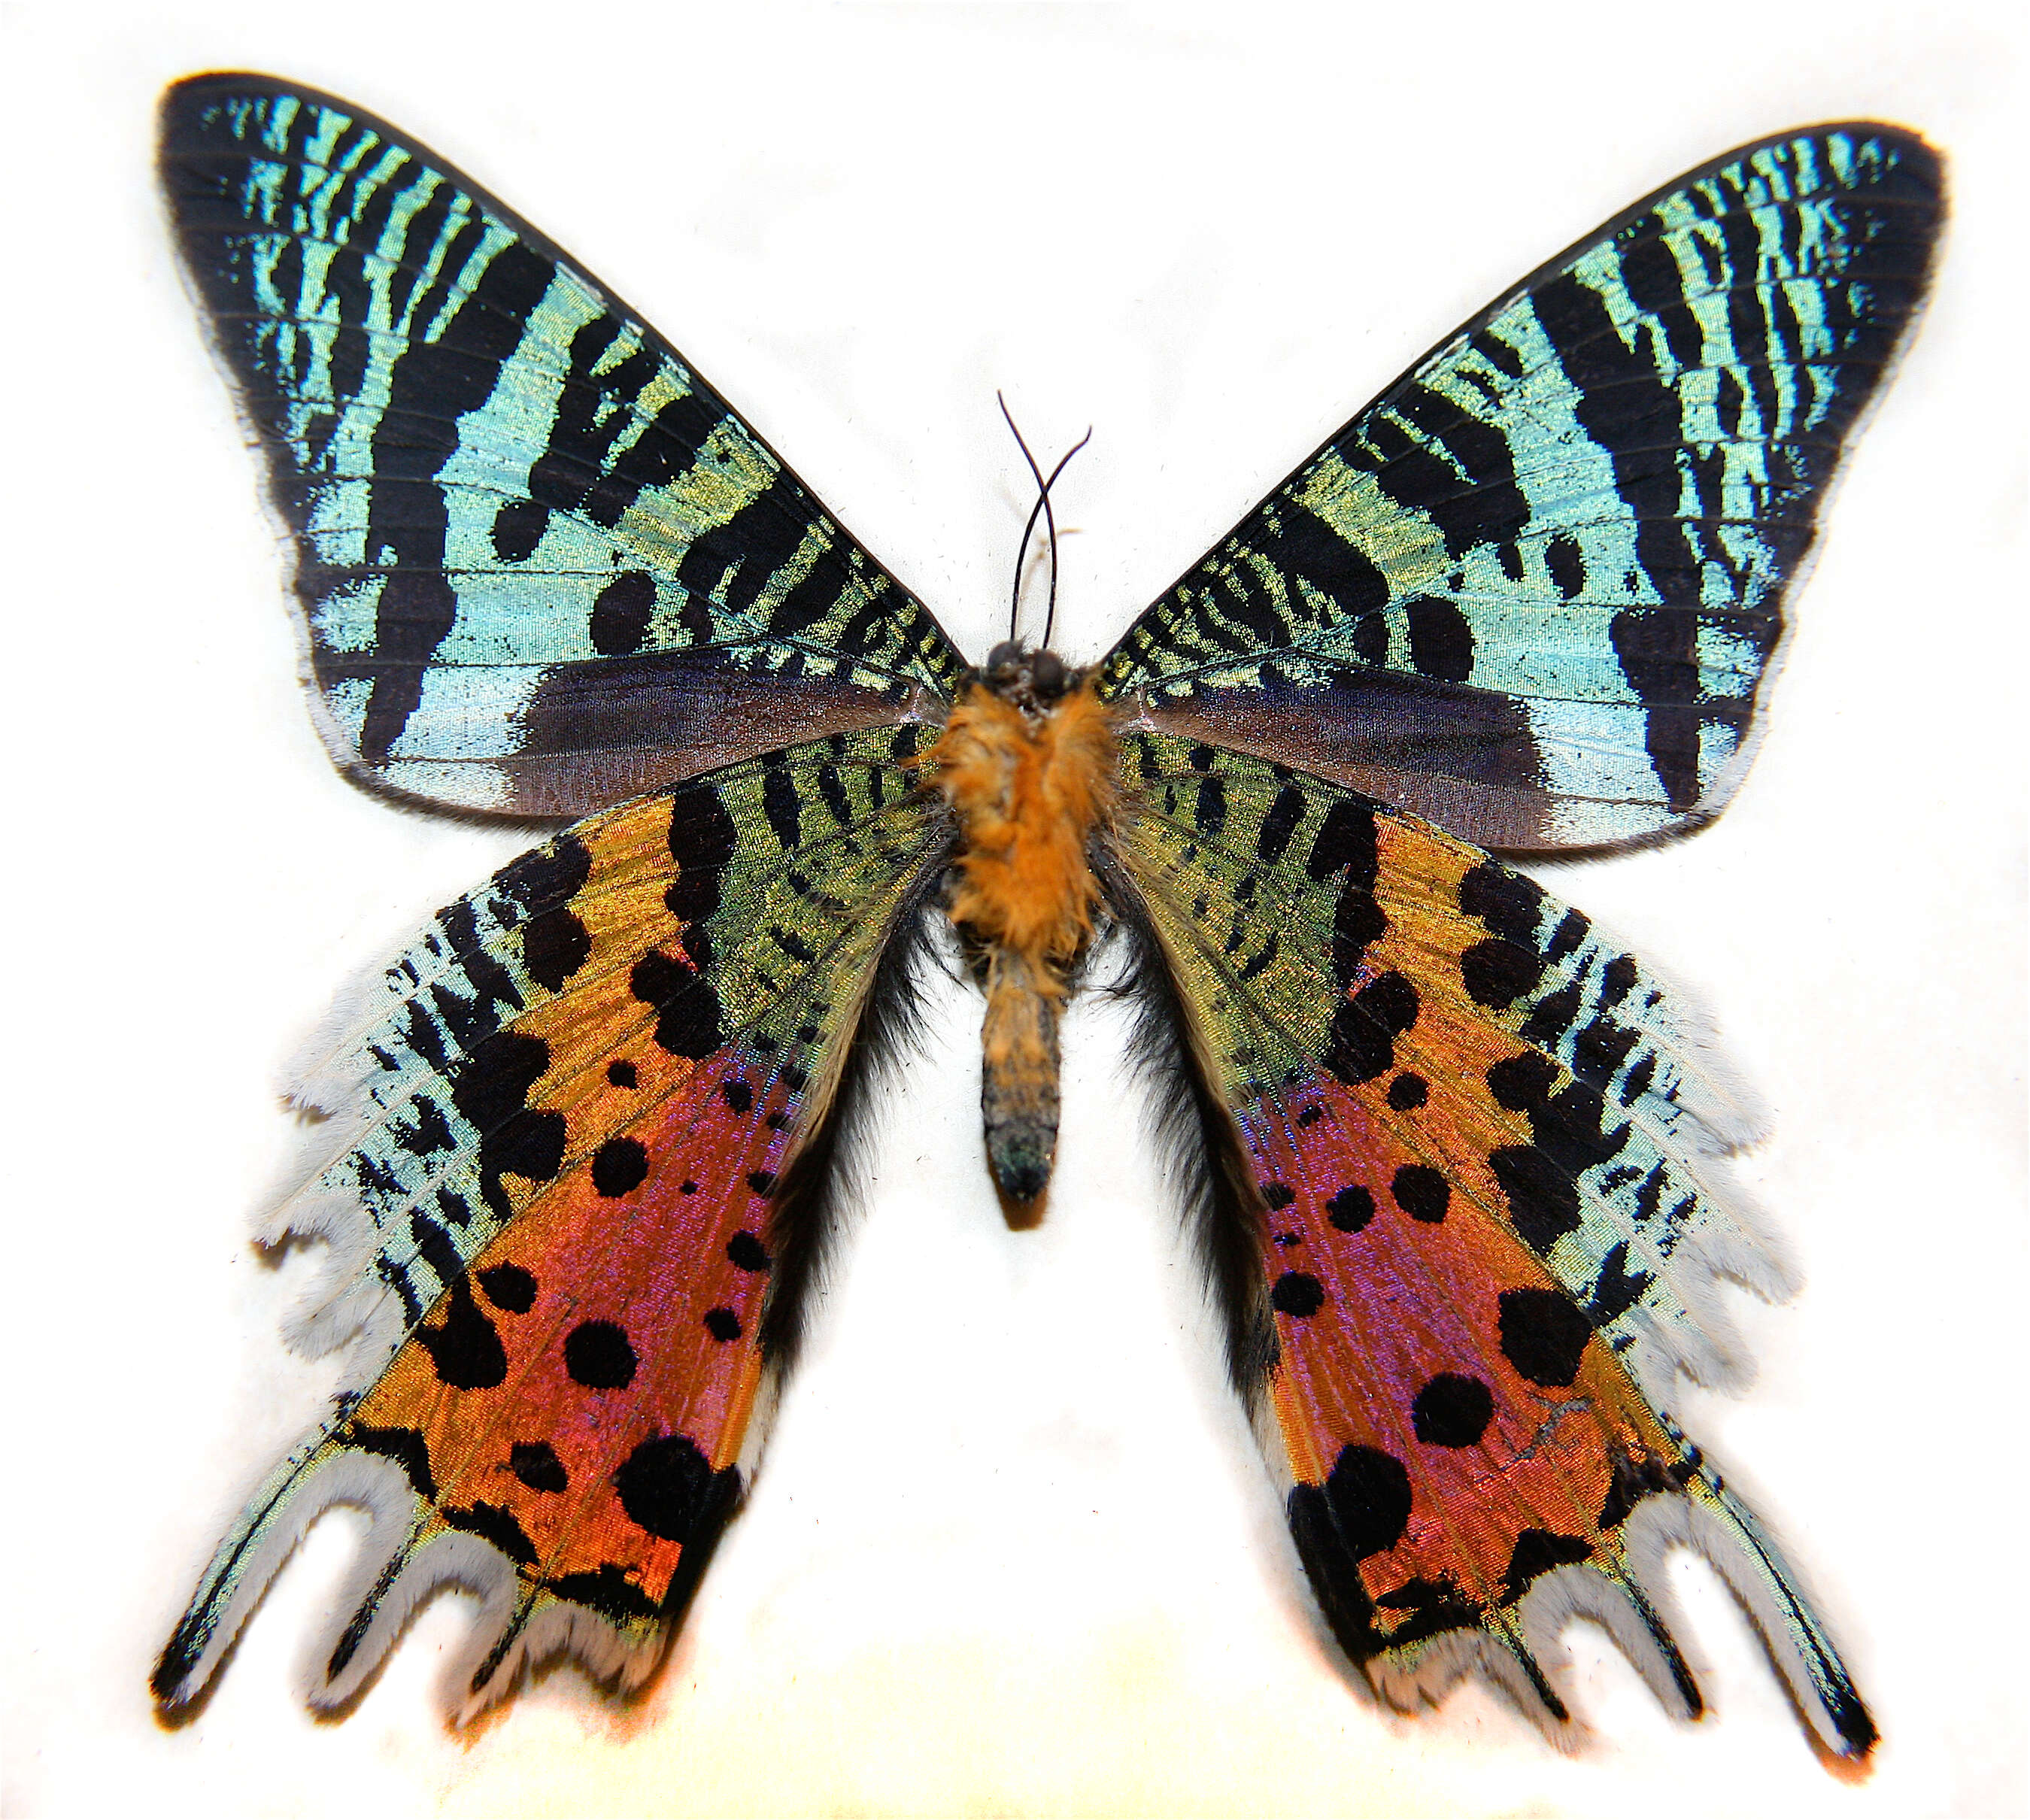 Image of Madagascan Sunset Moth